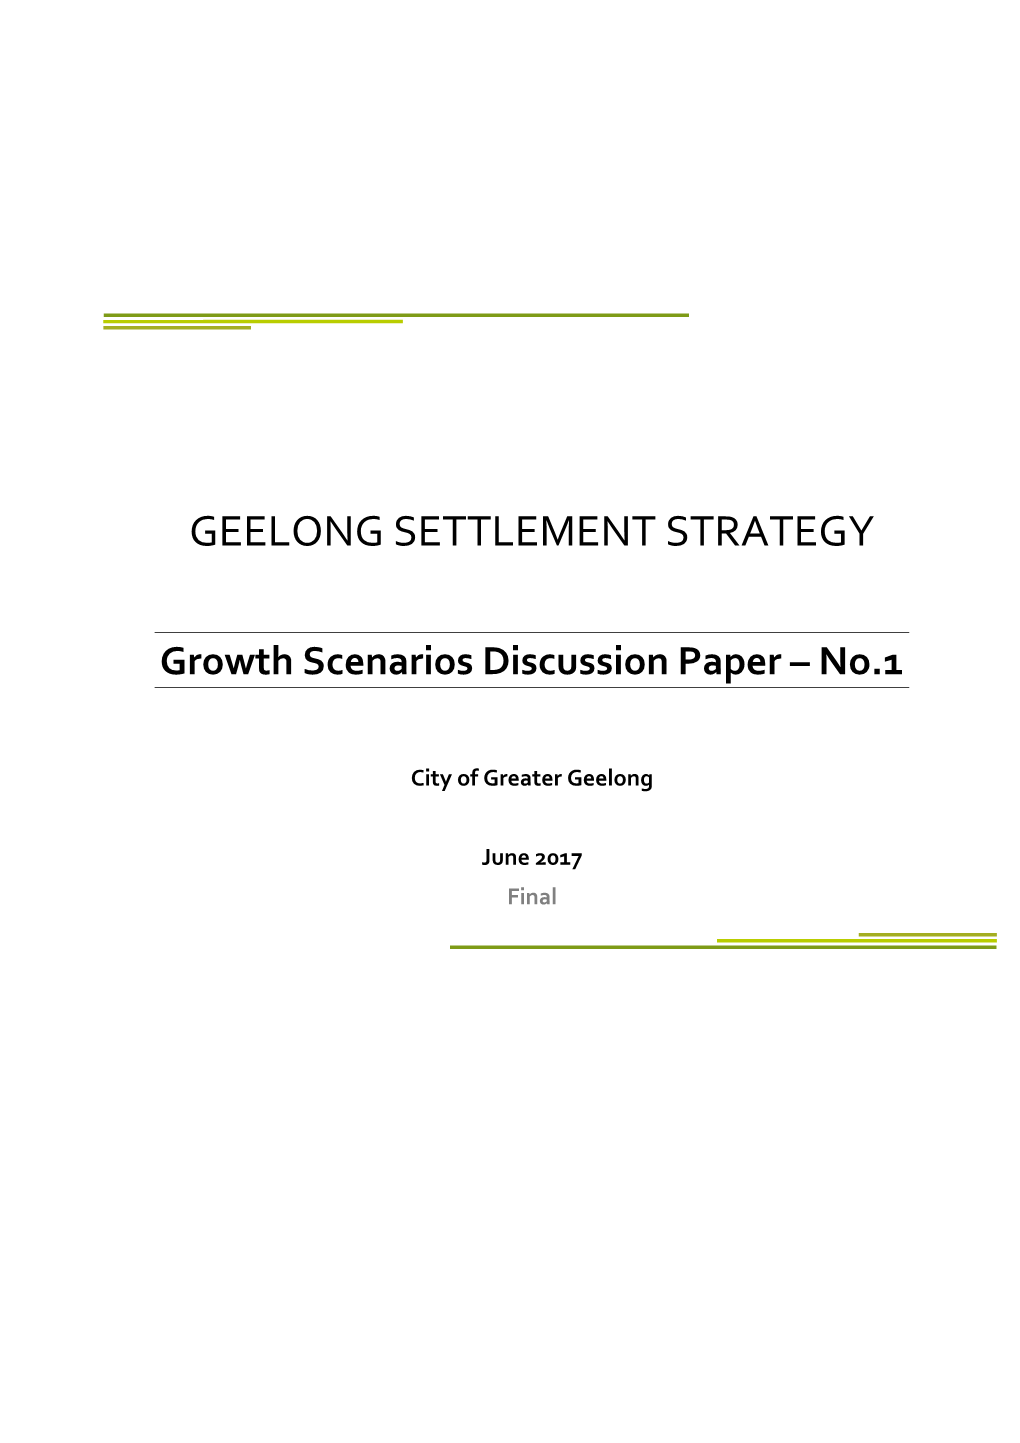 Growth Scenarios Discussion Paper No.1